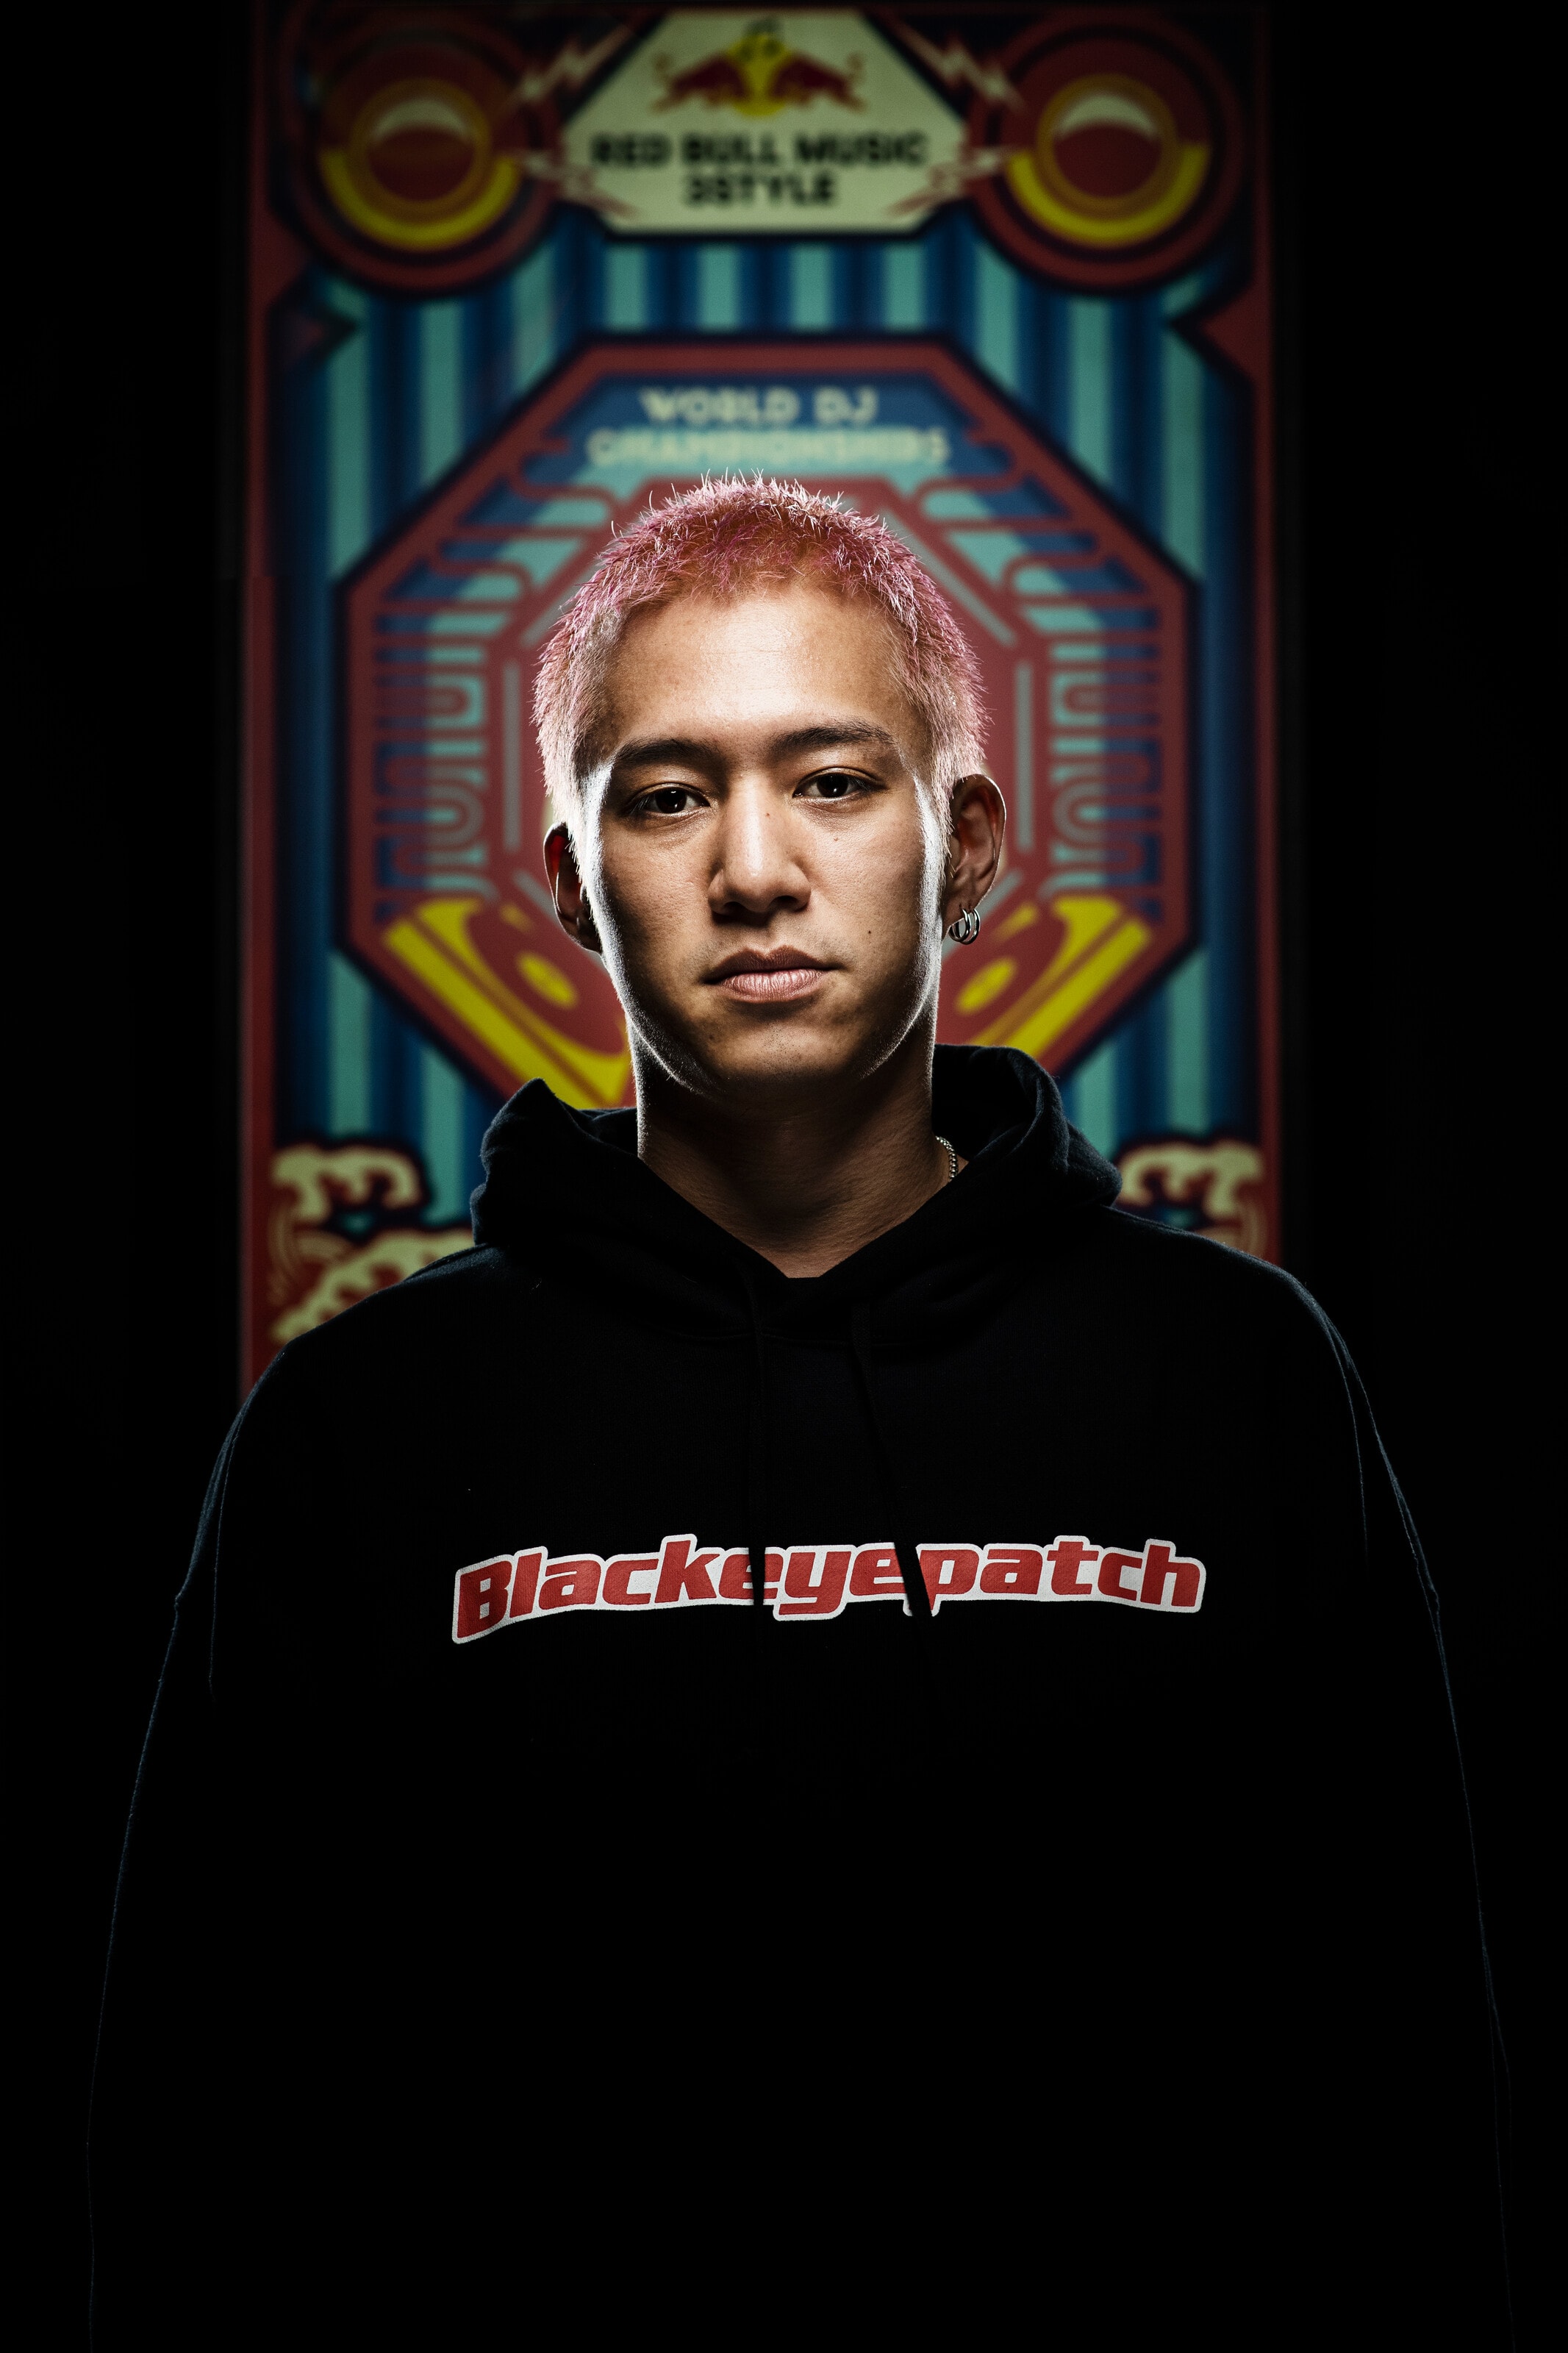 DinPei 再次奪下 Red Bull 3Style 世界 DJ 大賽台灣站冠軍